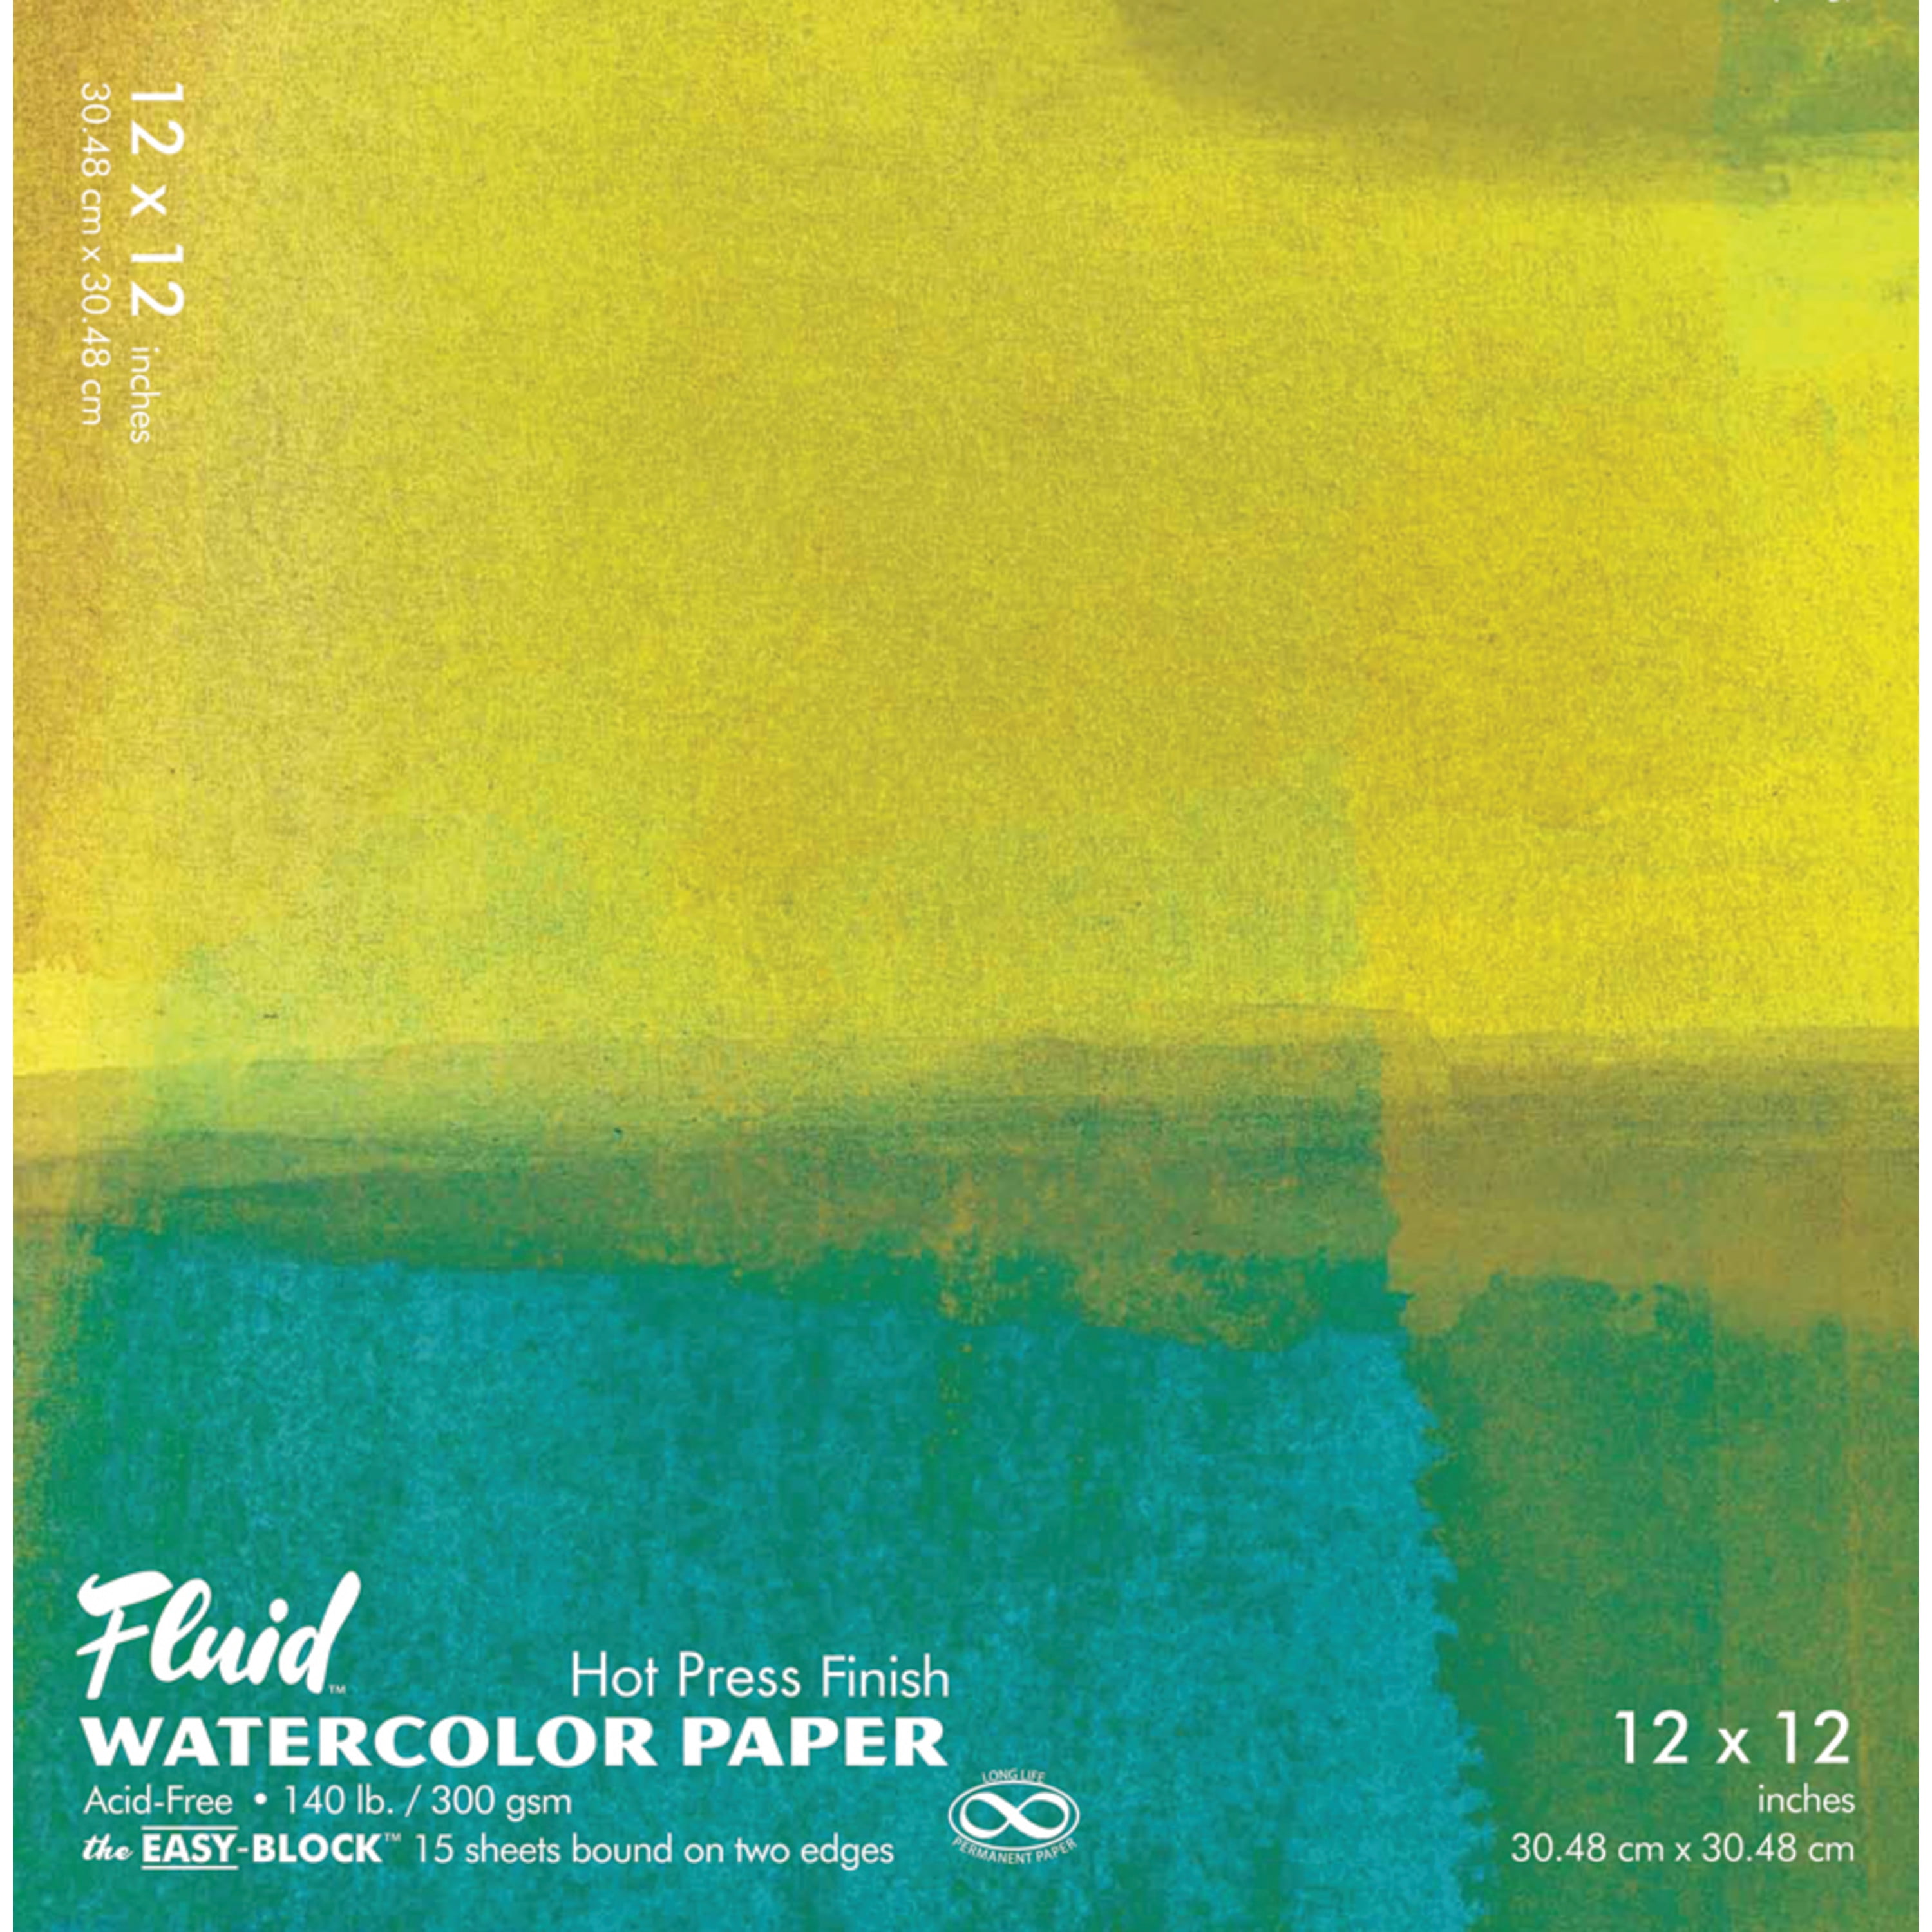 WA Portman A4 Cold Press Professional Watercolor Block Journal